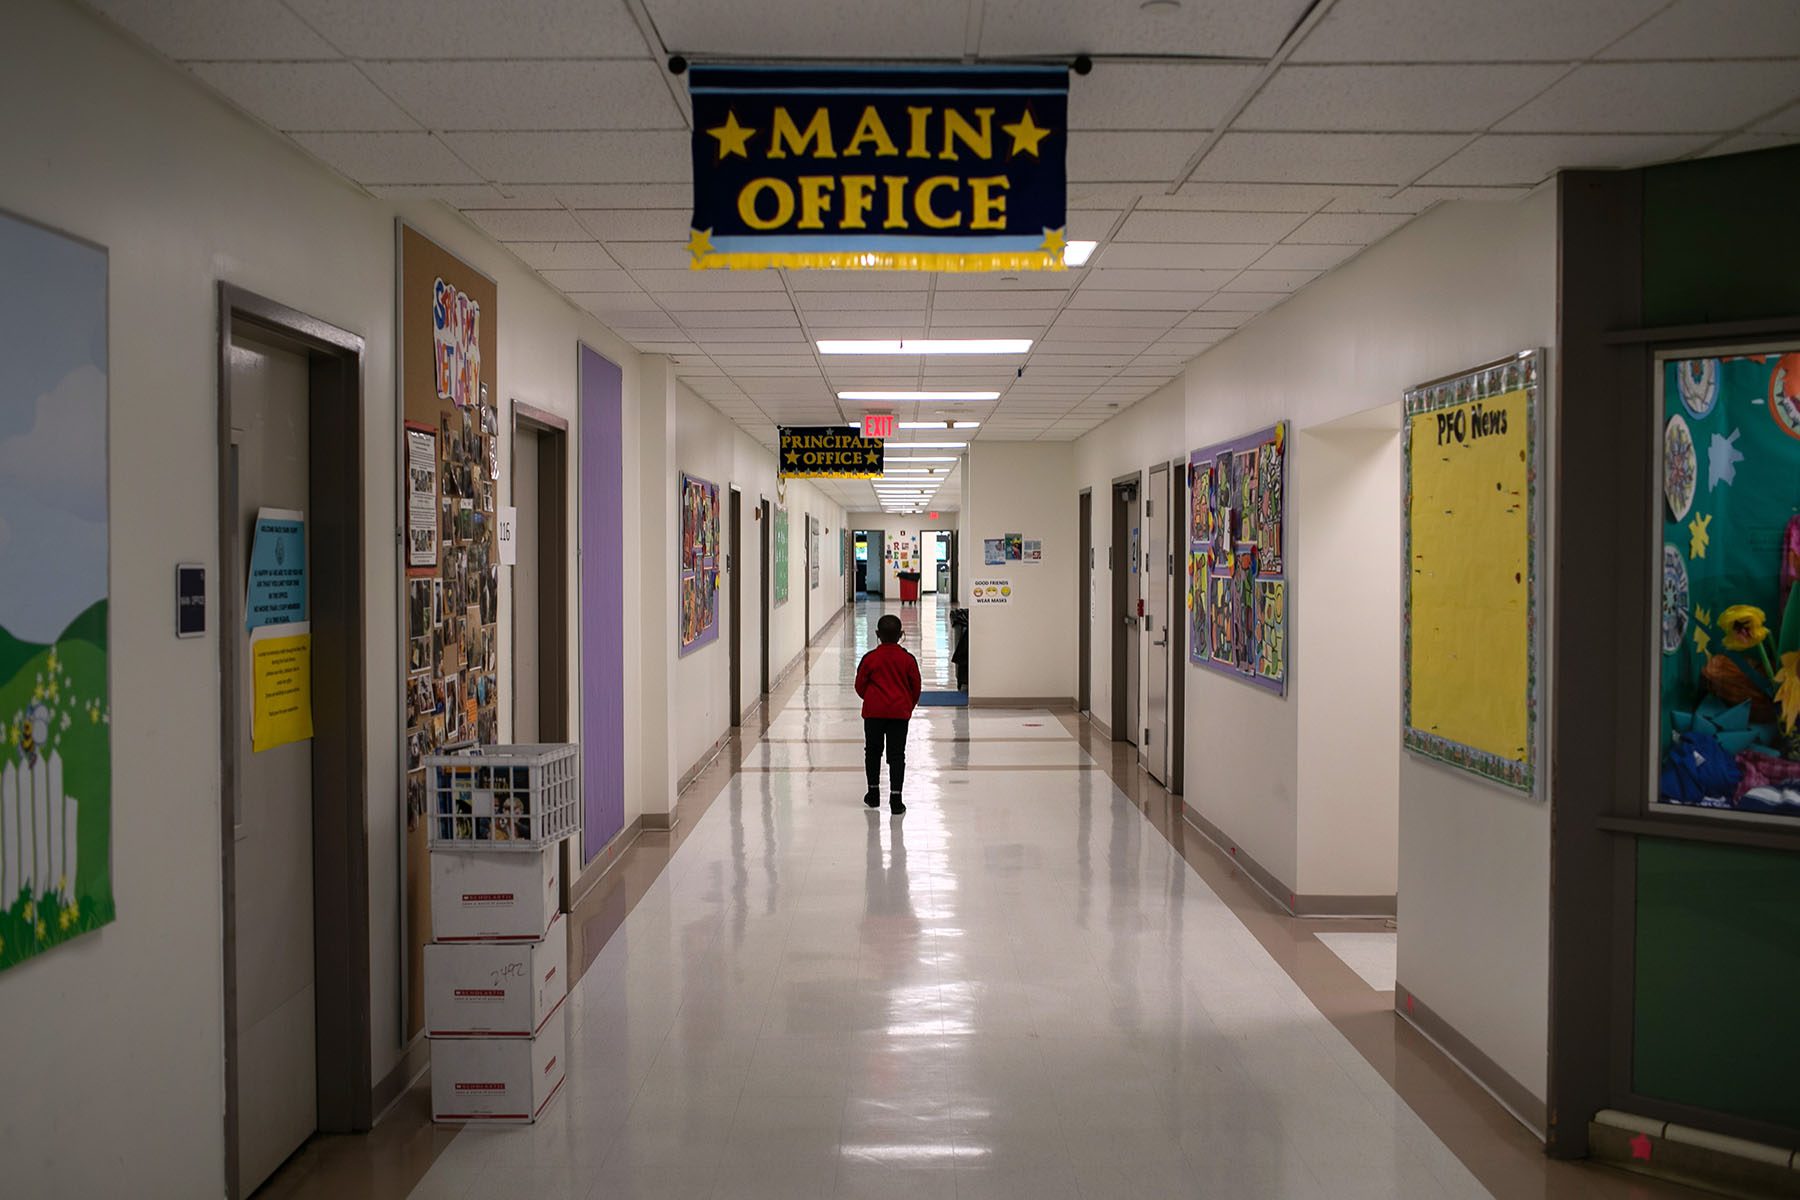 A child walks through the halls between classes.